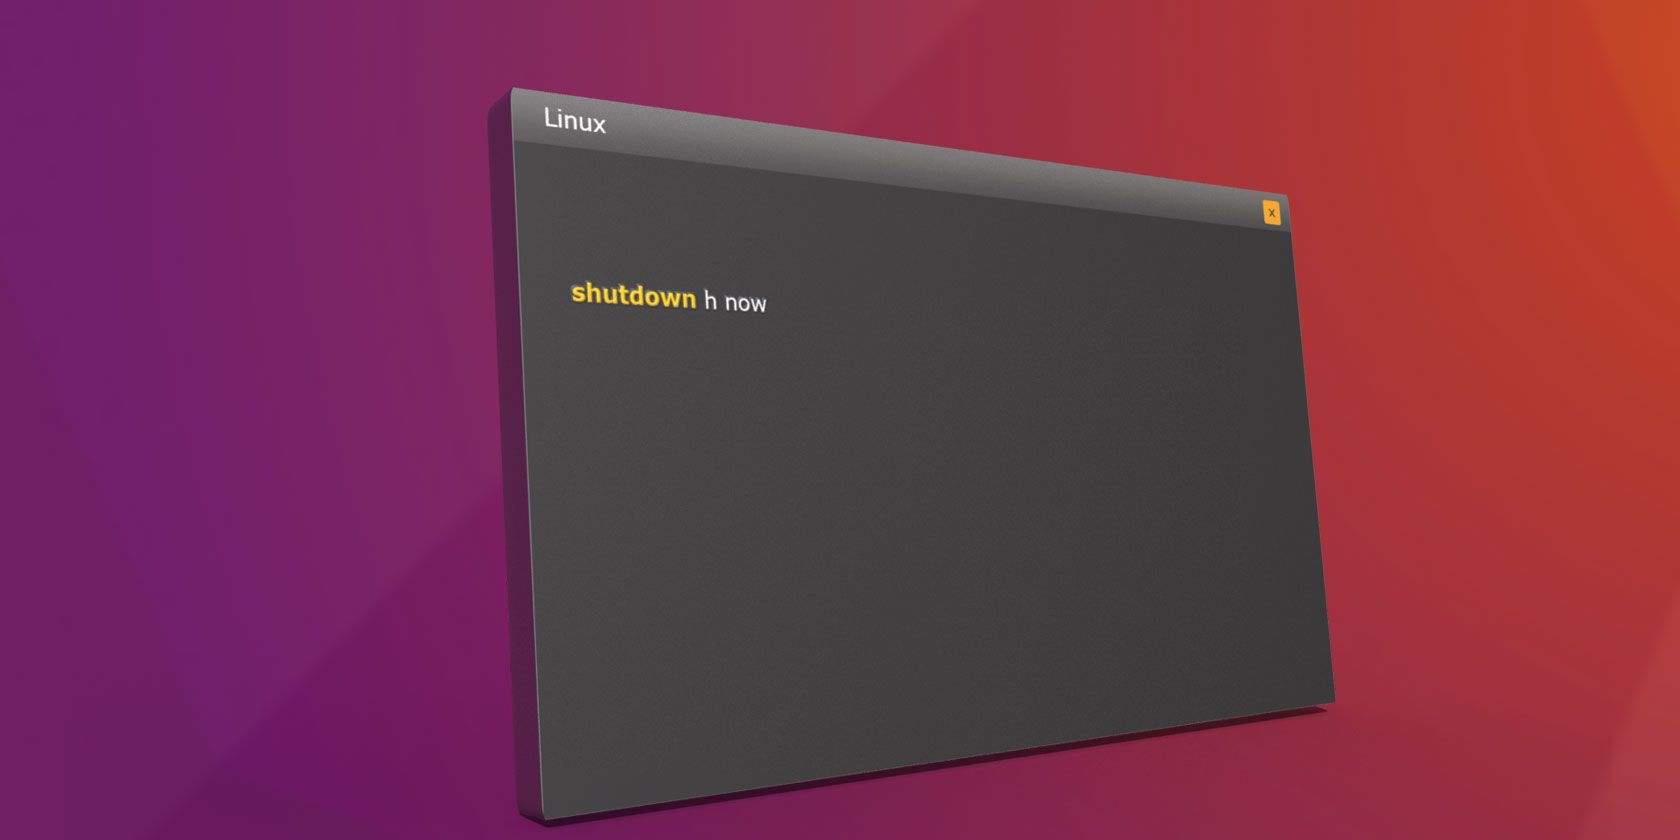 shutdown a remoter windows computer in linux